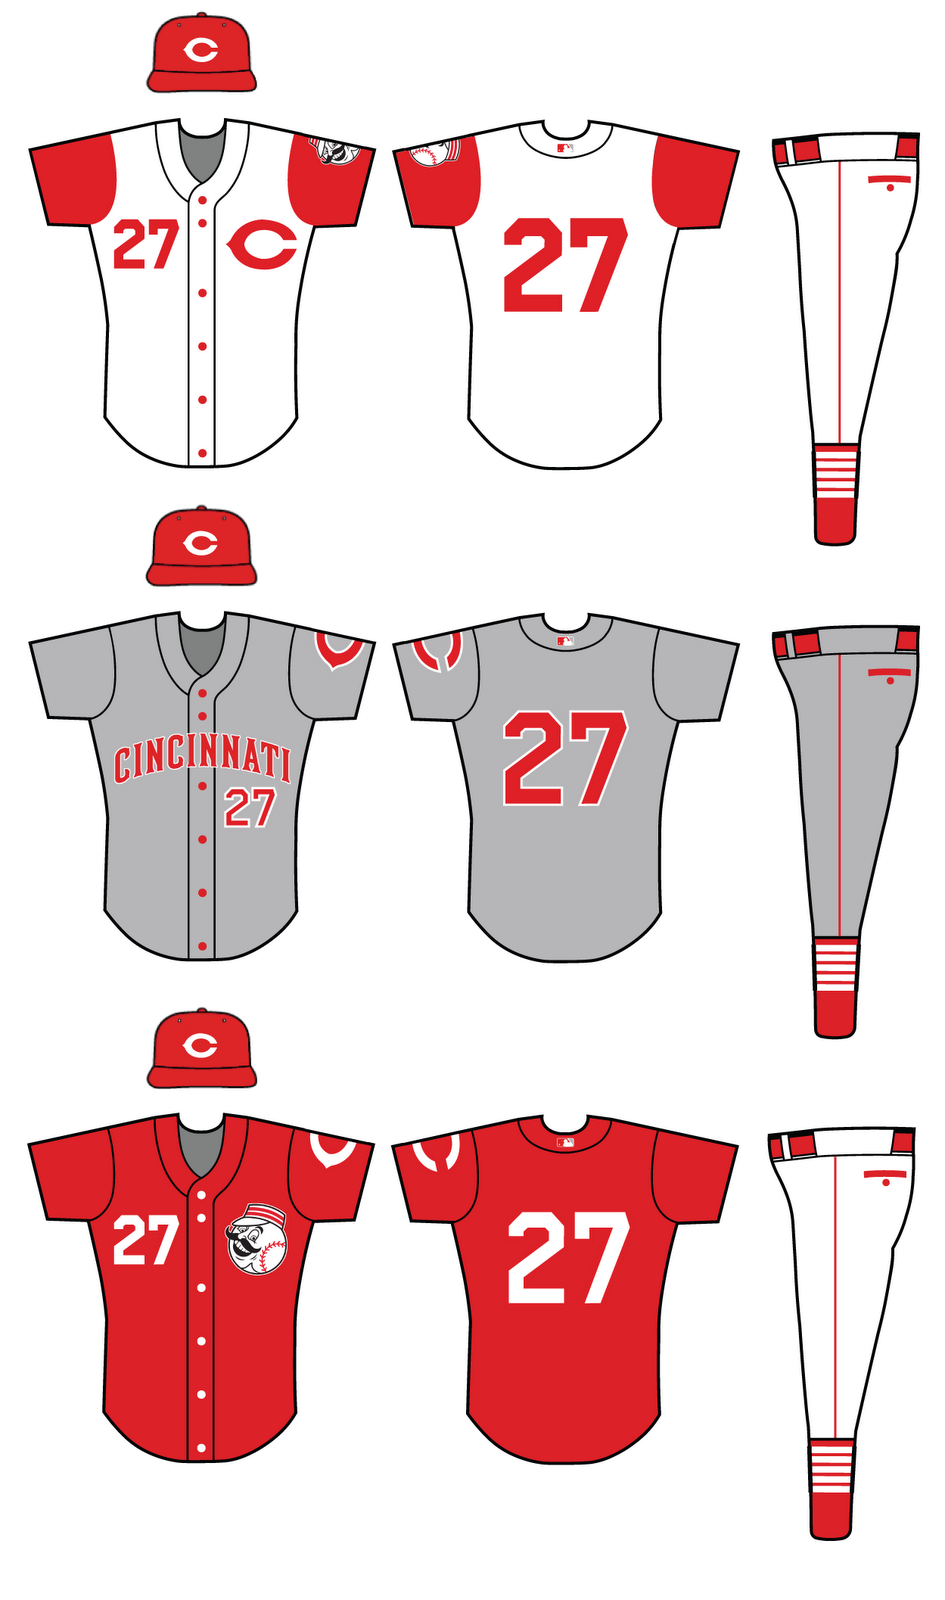 Cincinnati Reds Concept - Concepts - Chris Creamer's Sports Logos Community  - CCSLC - SportsLogos.Net Forums